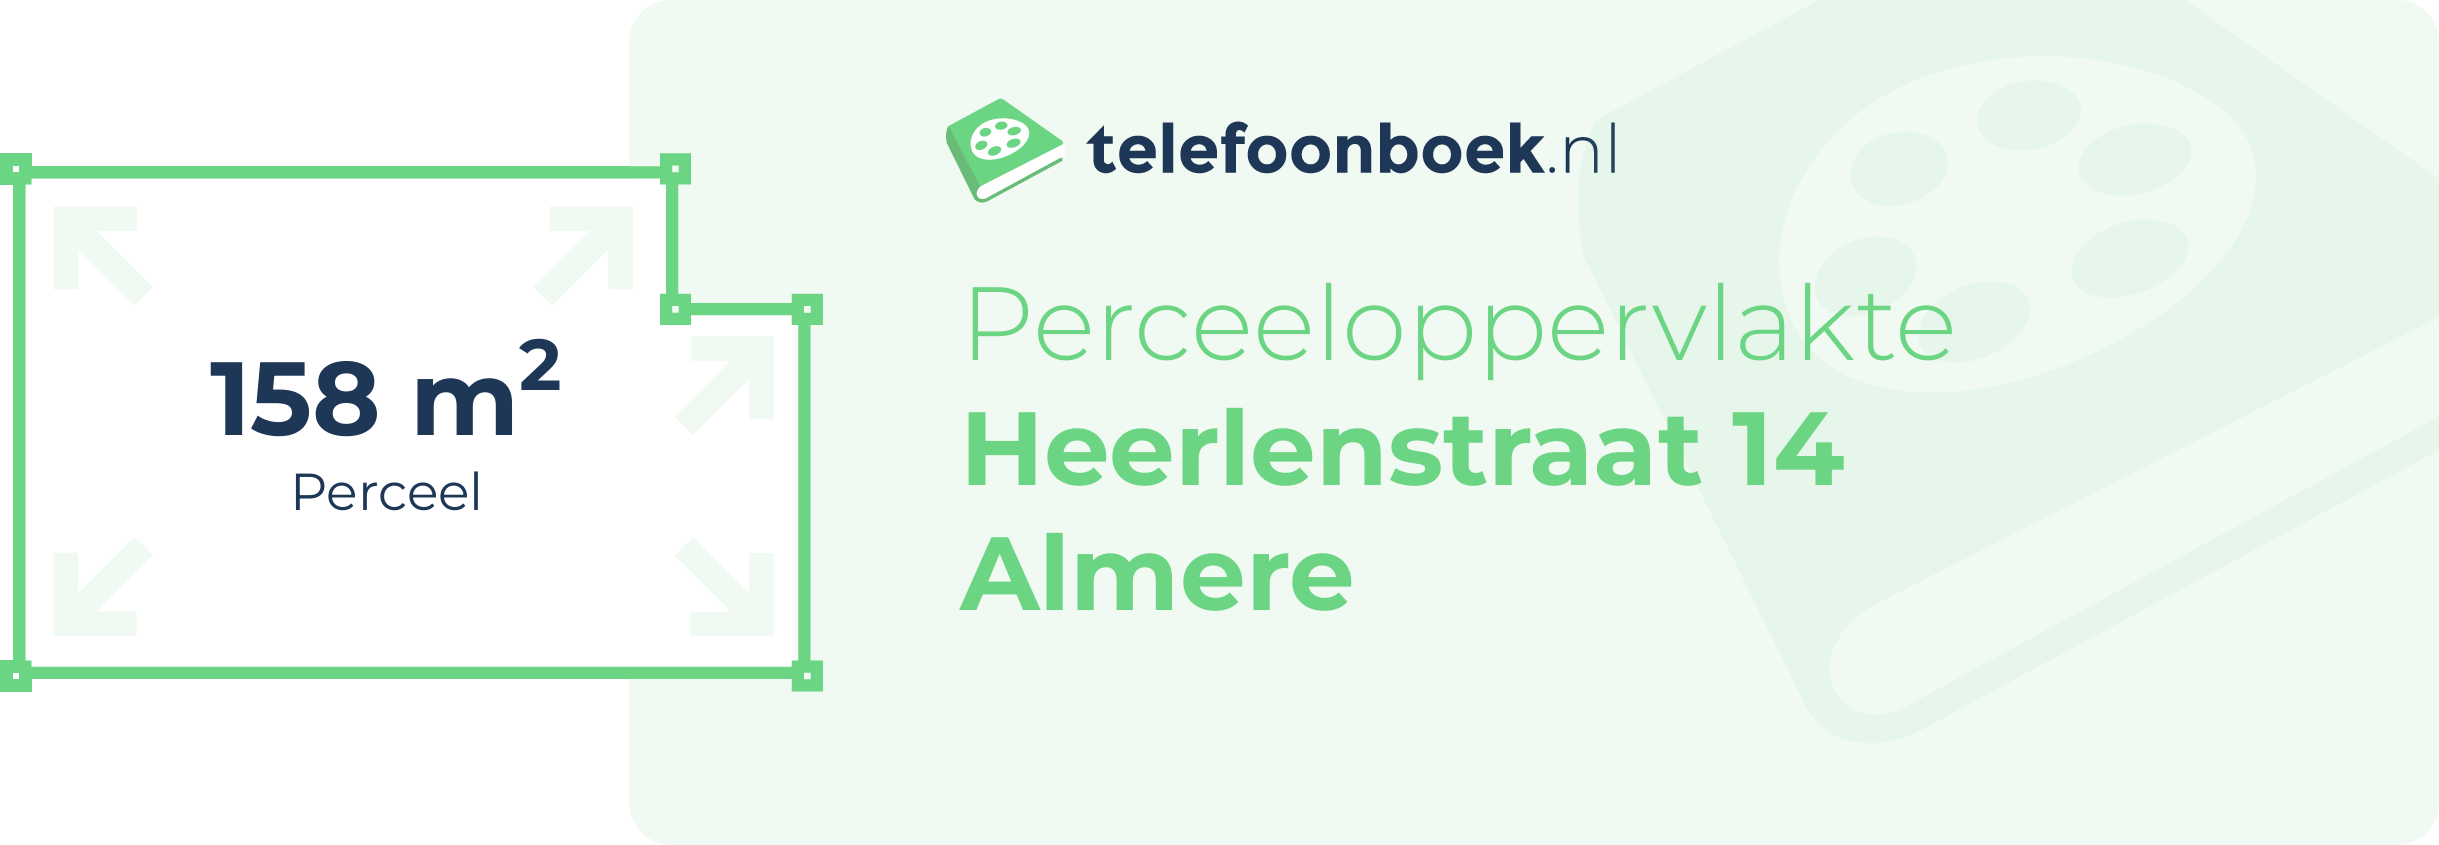 Perceeloppervlakte Heerlenstraat 14 Almere